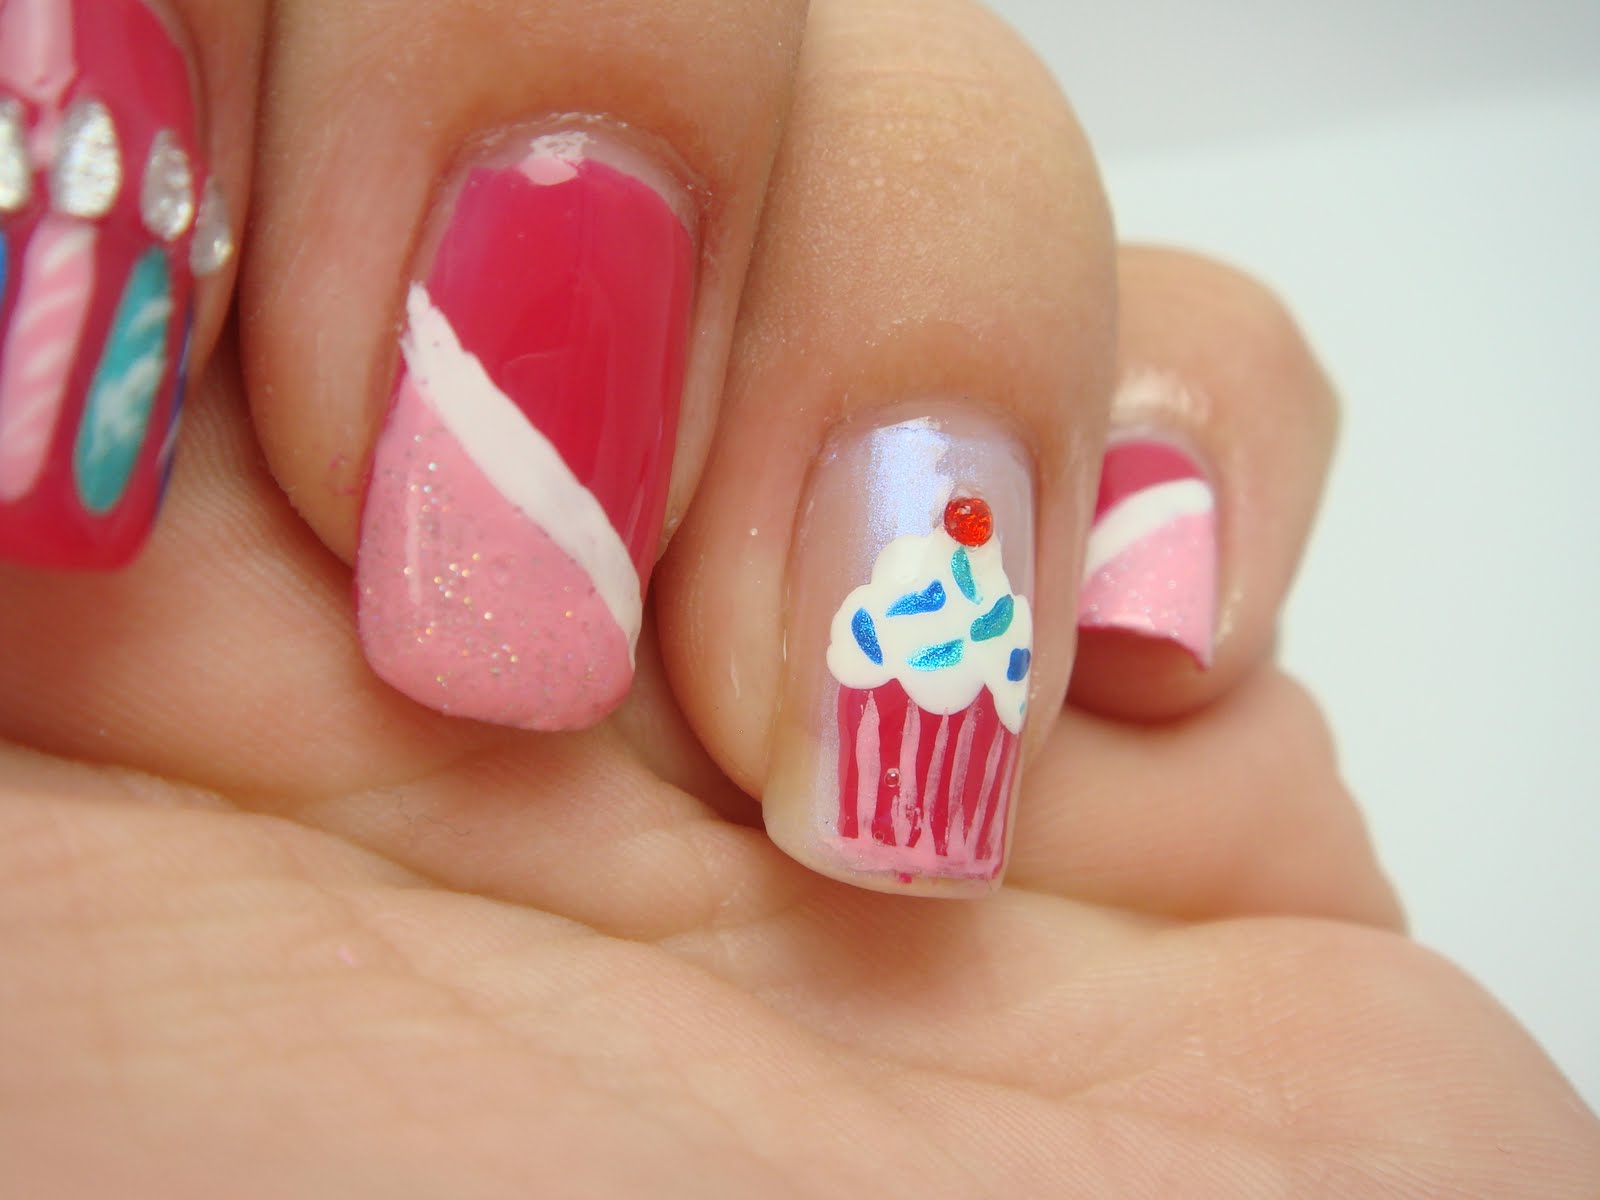 2. Fun and festive birthday nail designs - wide 3